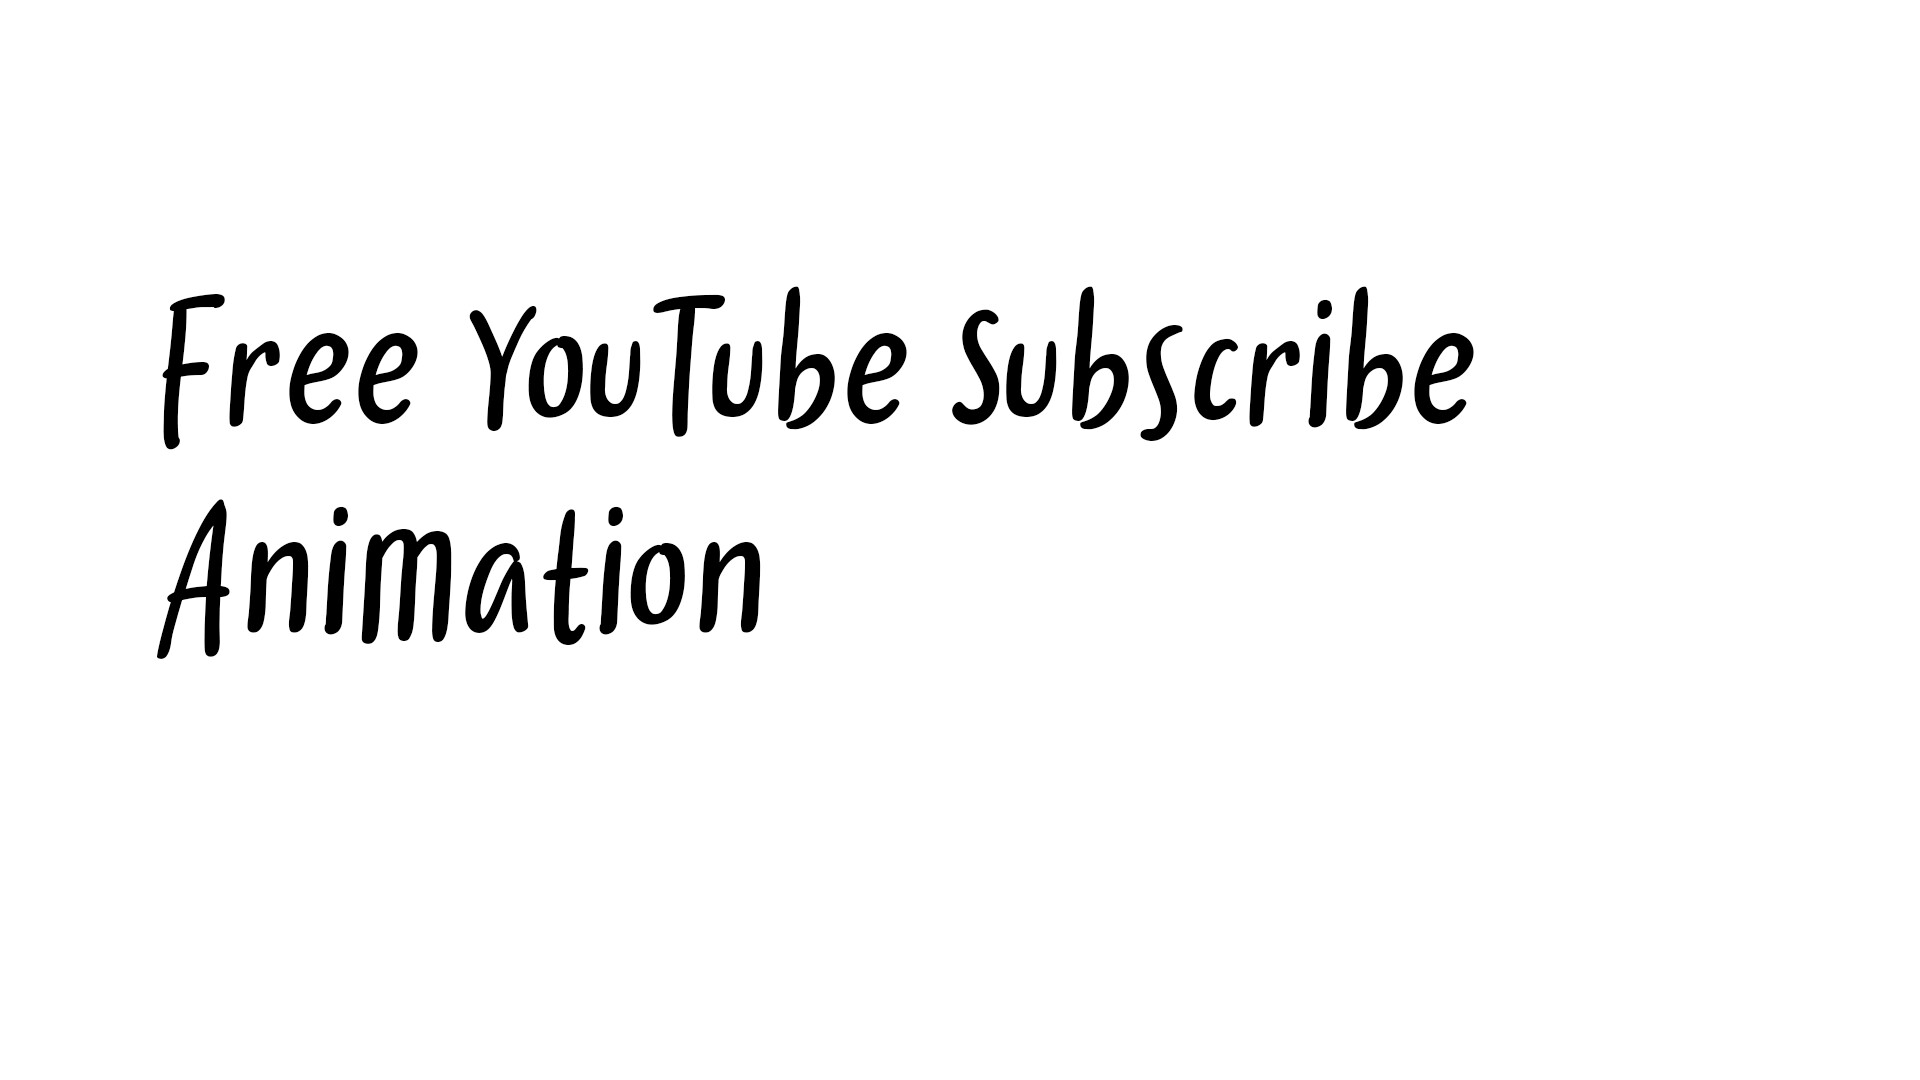 ArtStation - Free YouTube Subscribe Animation for Art community